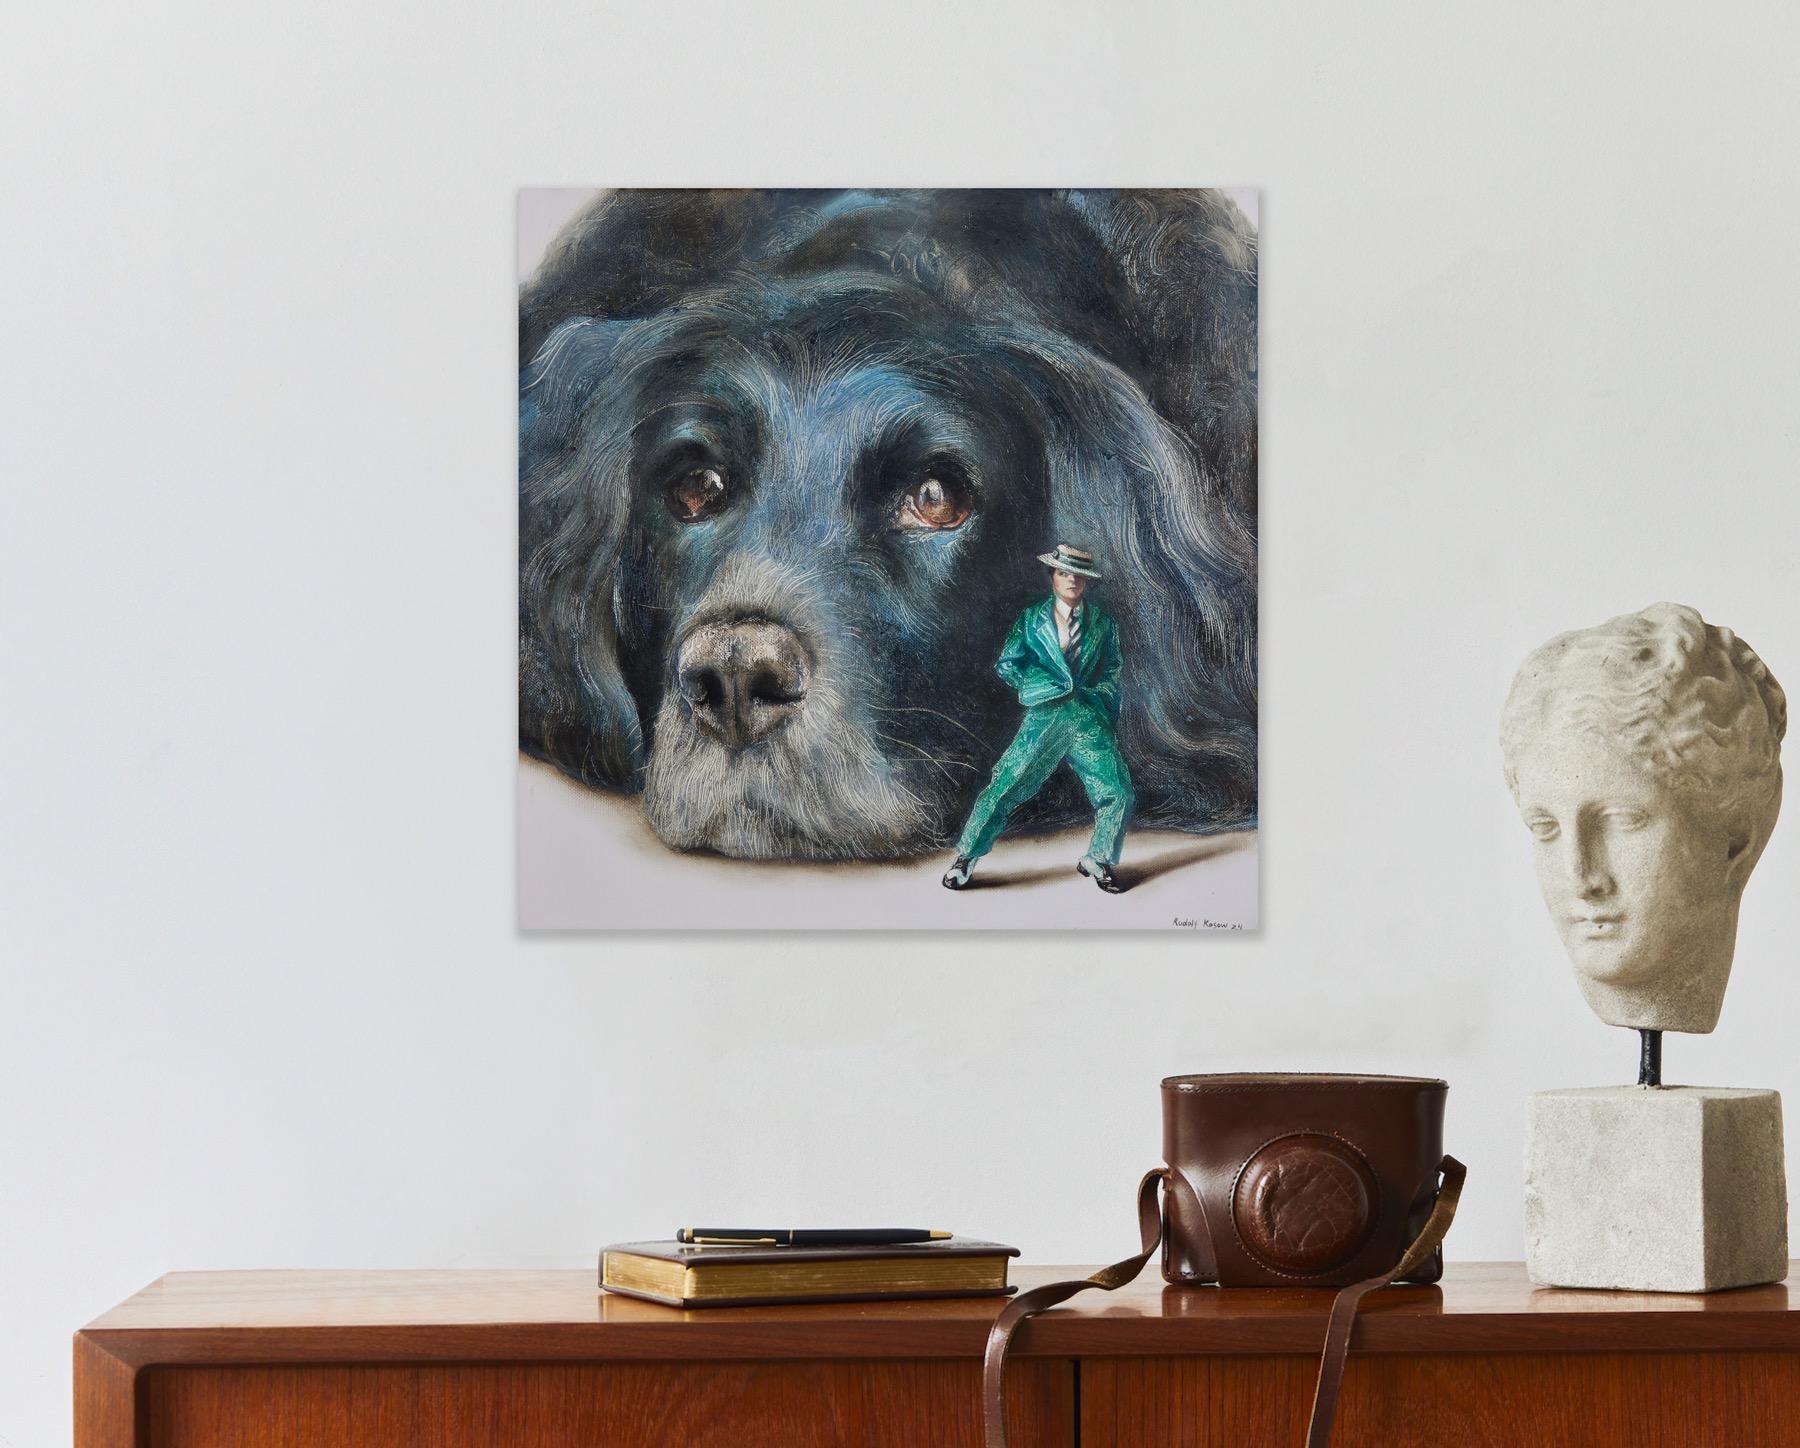 Moody (black dog, hat man, green vintage suit, animal, surrealist oil painting) For Sale 10